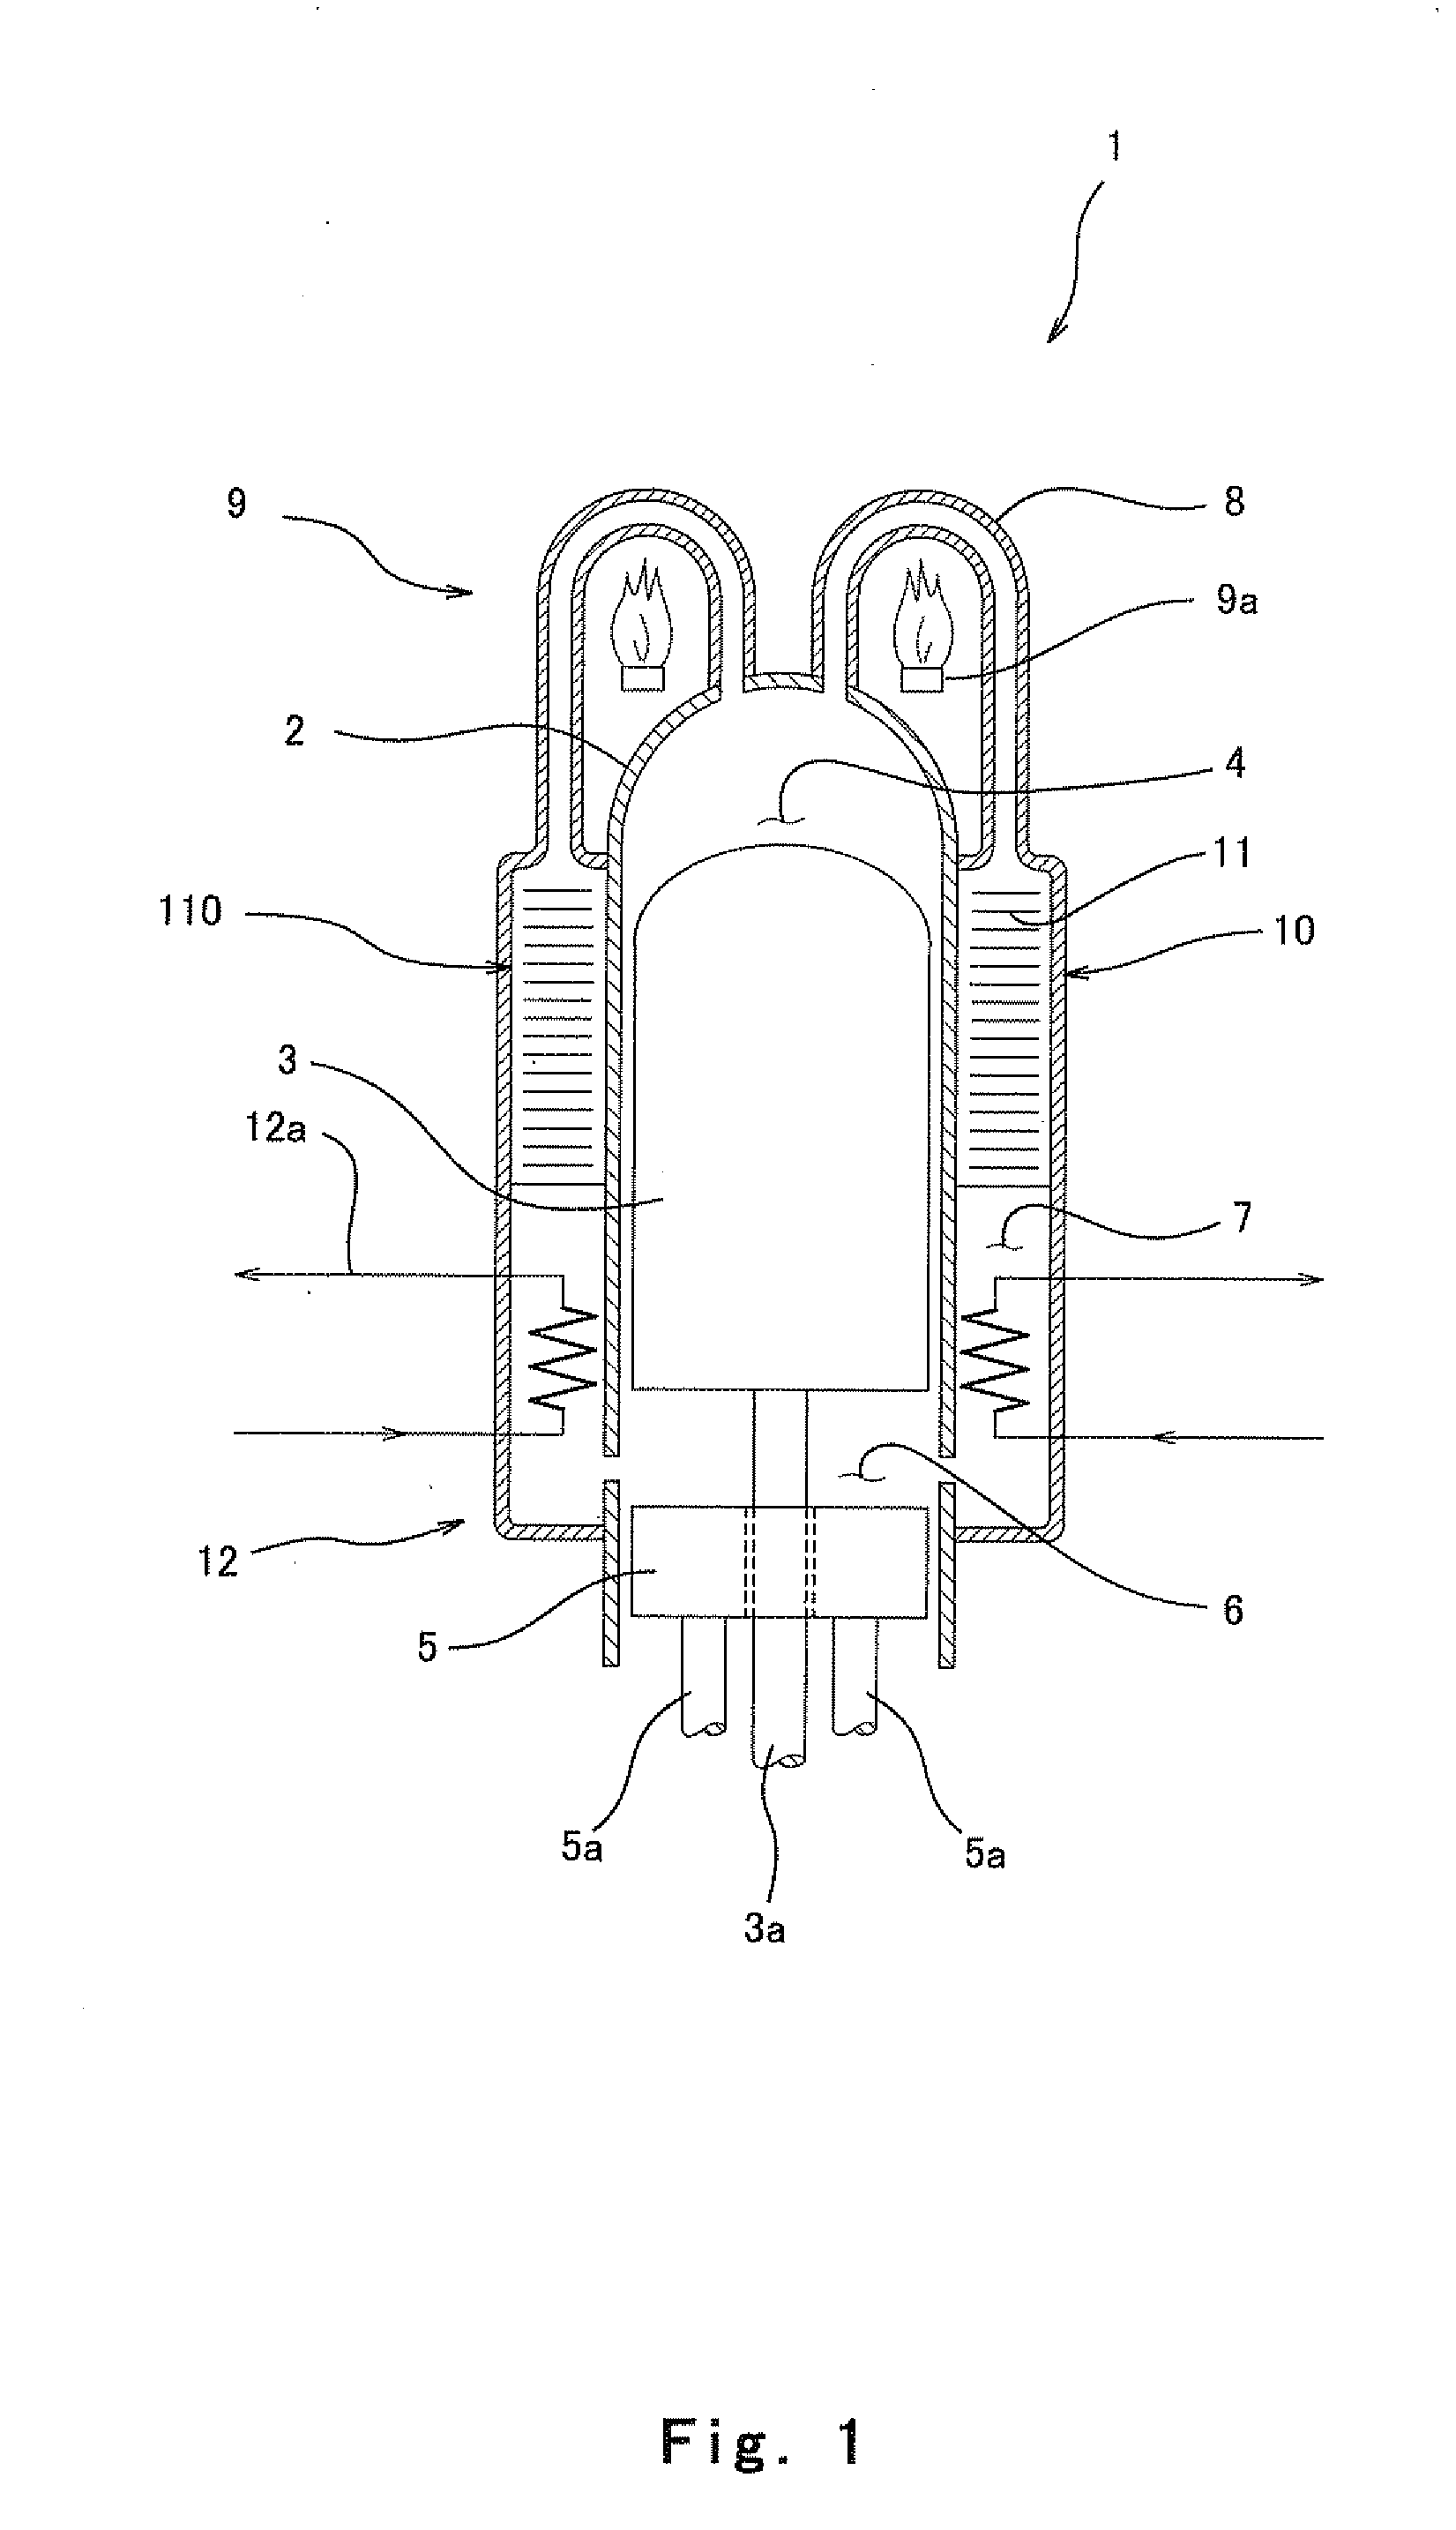 Heat engine regenerator and stirling engine using the regenerator